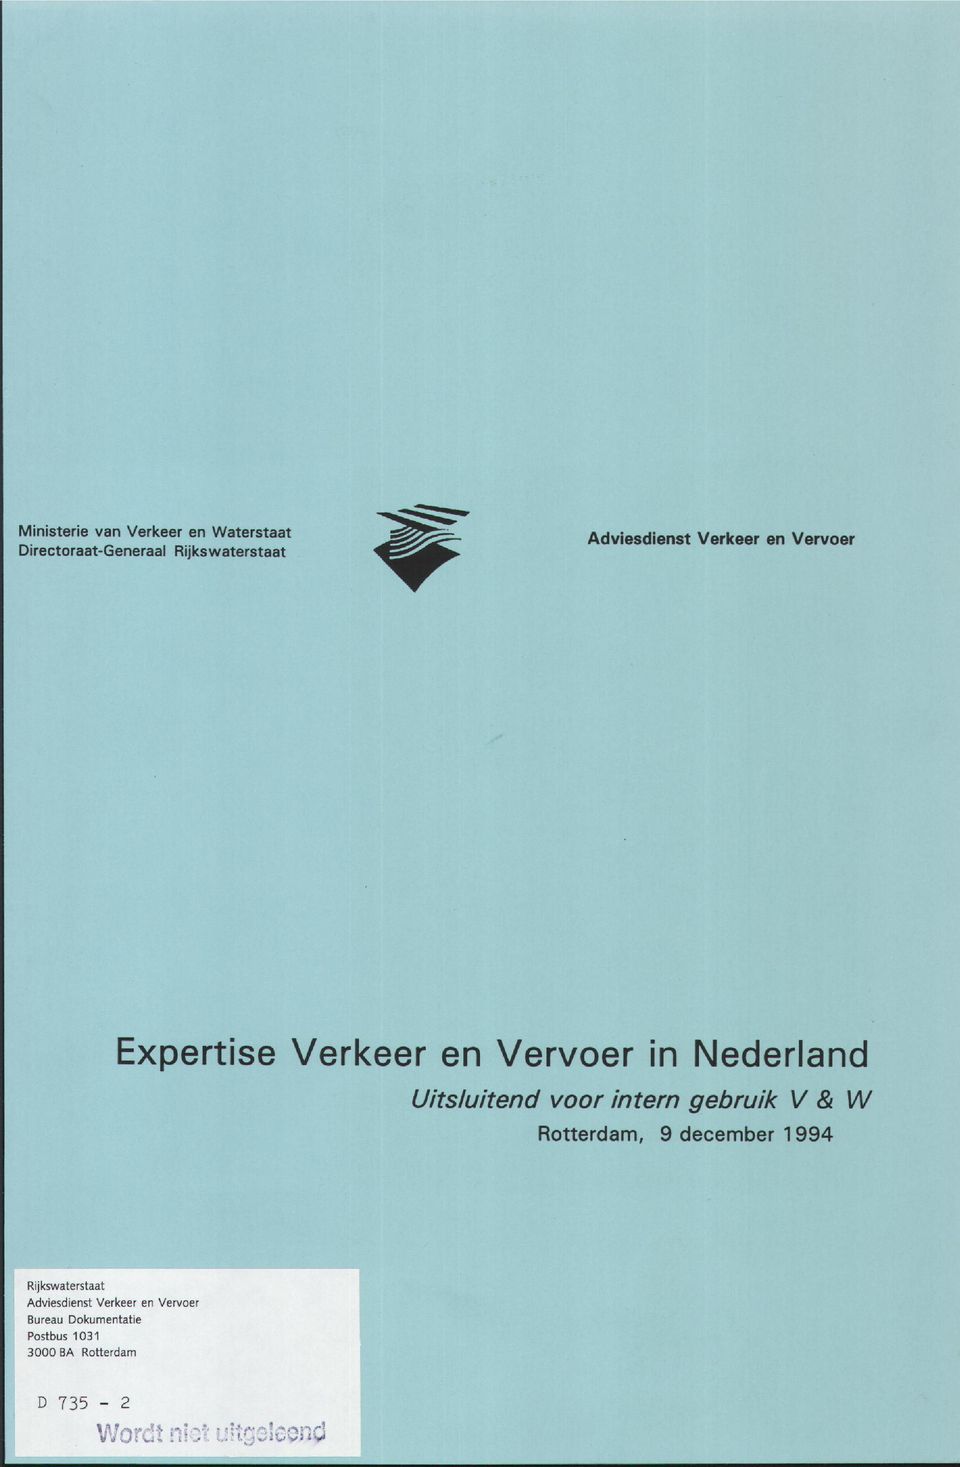 V & W Rotterdam, 9 december 1994 Rijkswaterstaat Adviesdienst Verkeer en VervoeÍ Bureau